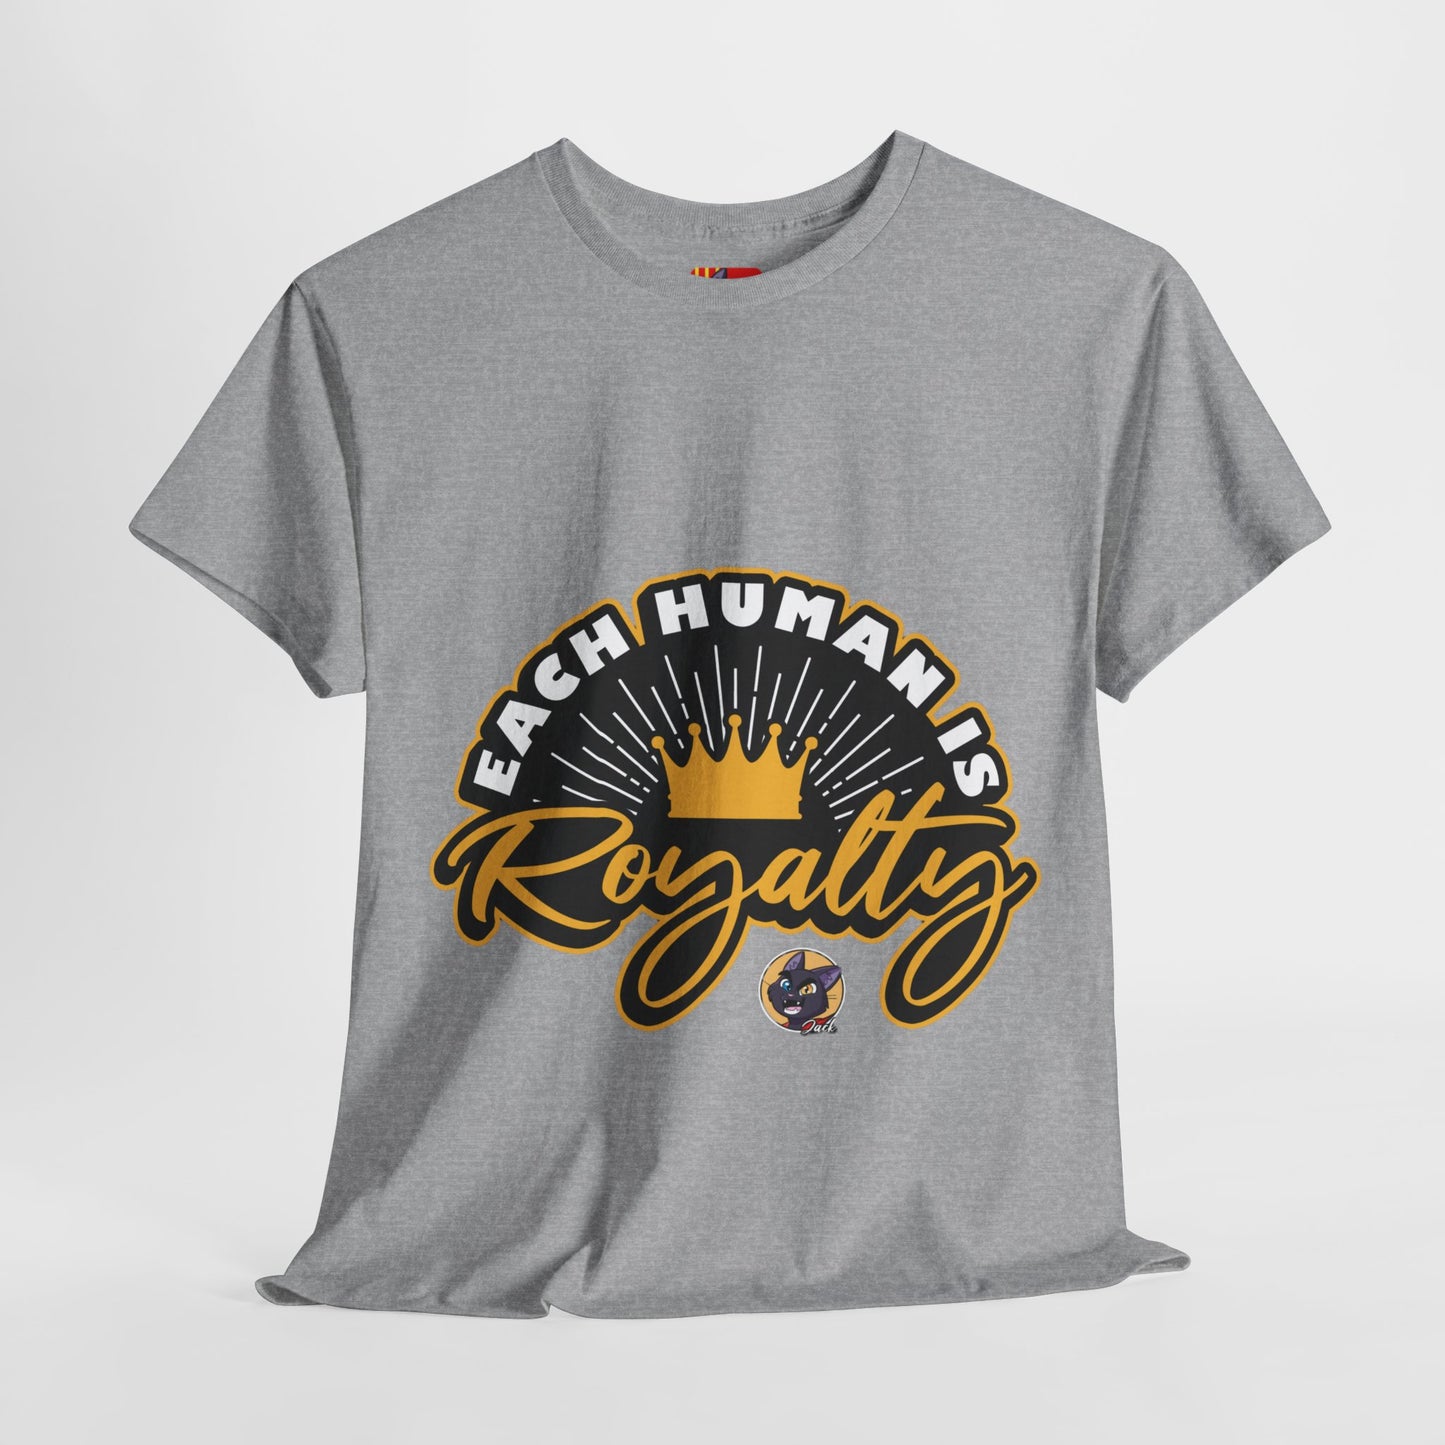 The Free Spirit T-Shirt: Each human is royalty Jack